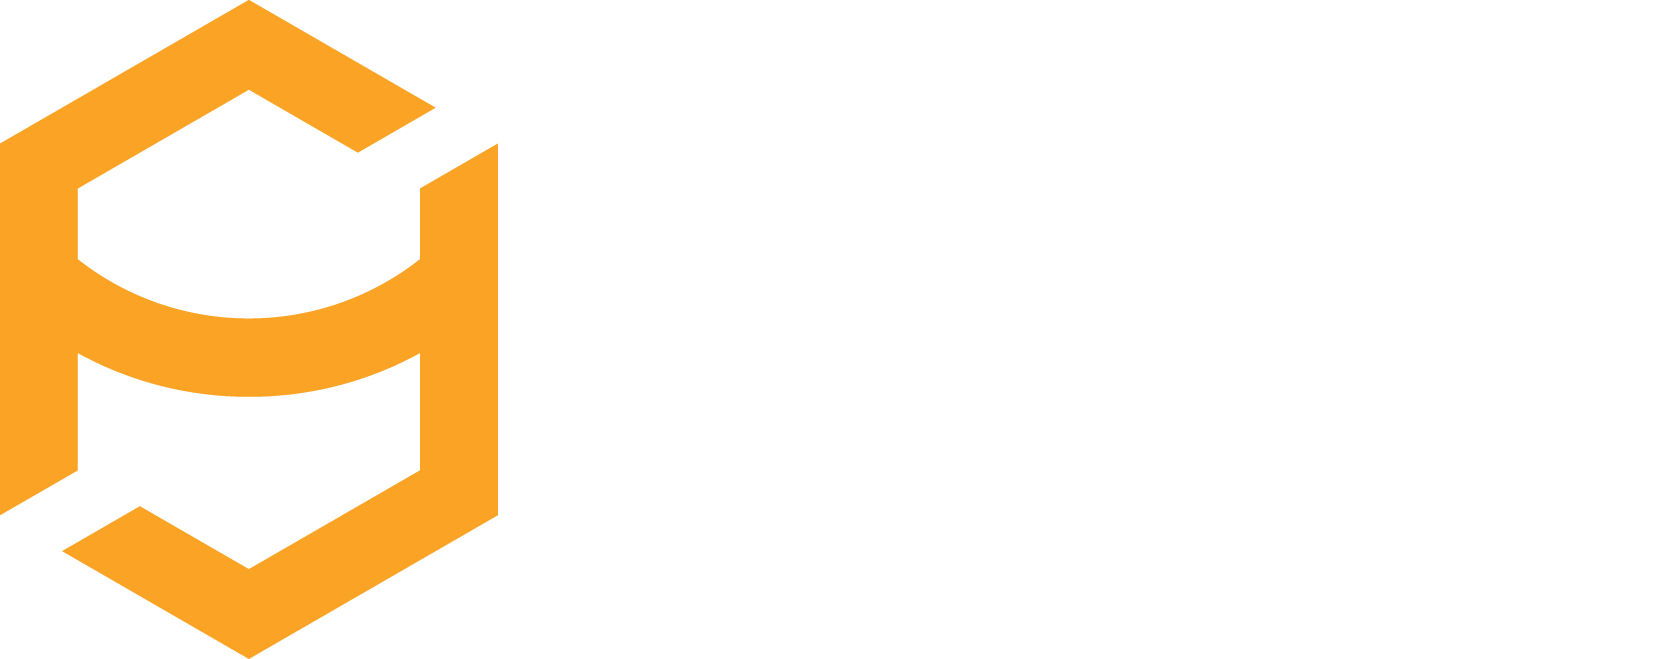 HSB Resources Reversed Logo